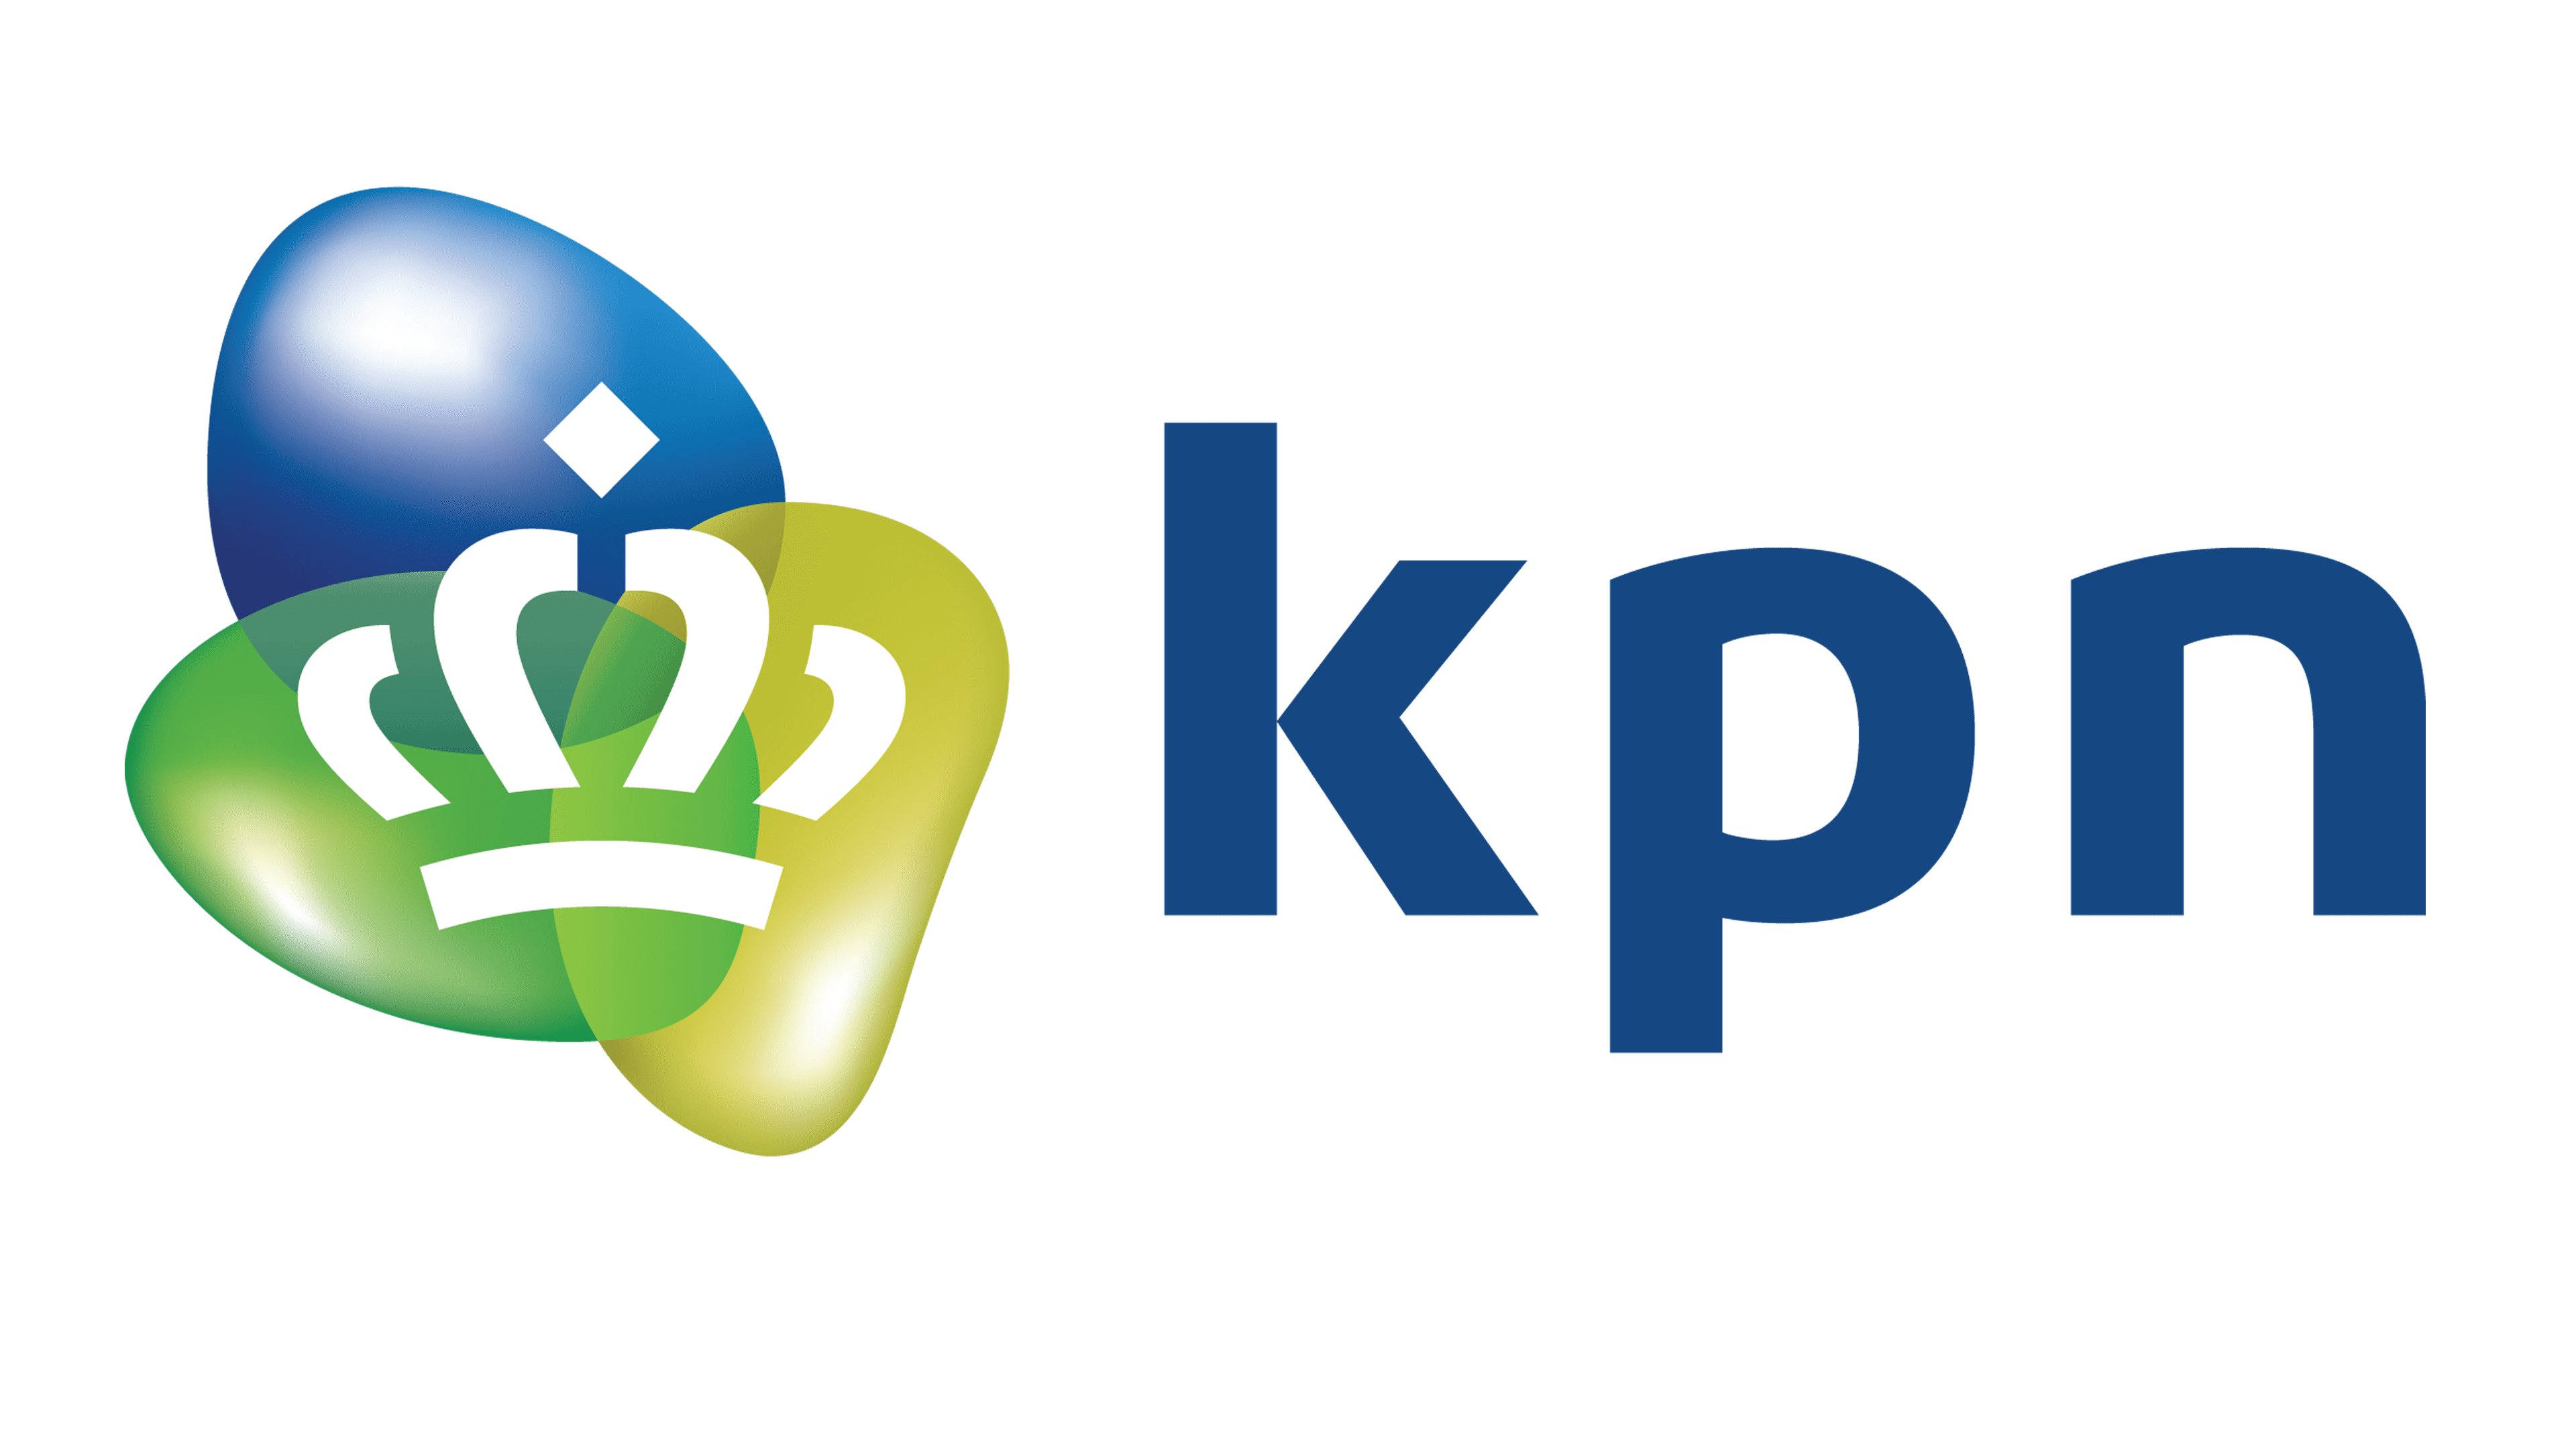 kpn Brand Logo